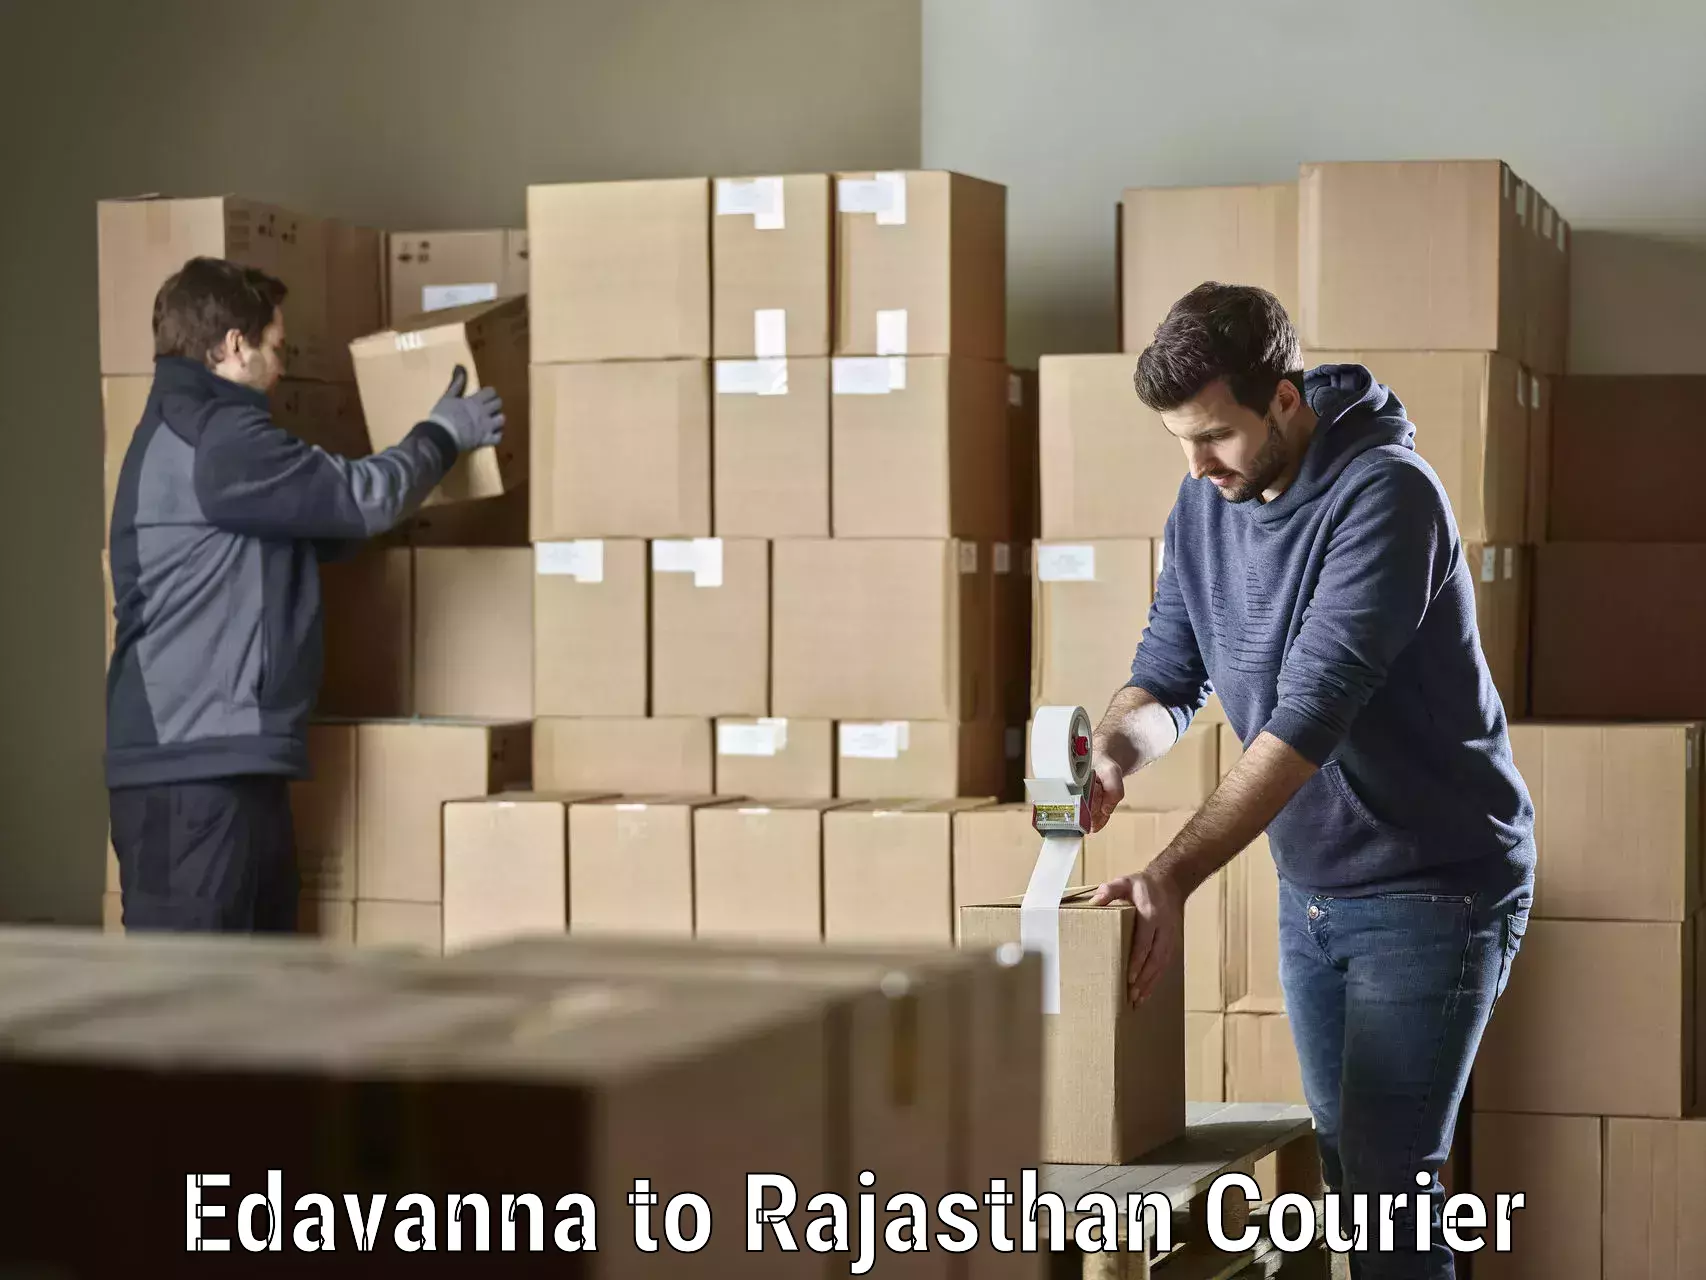 Doorstep delivery service Edavanna to Dudu